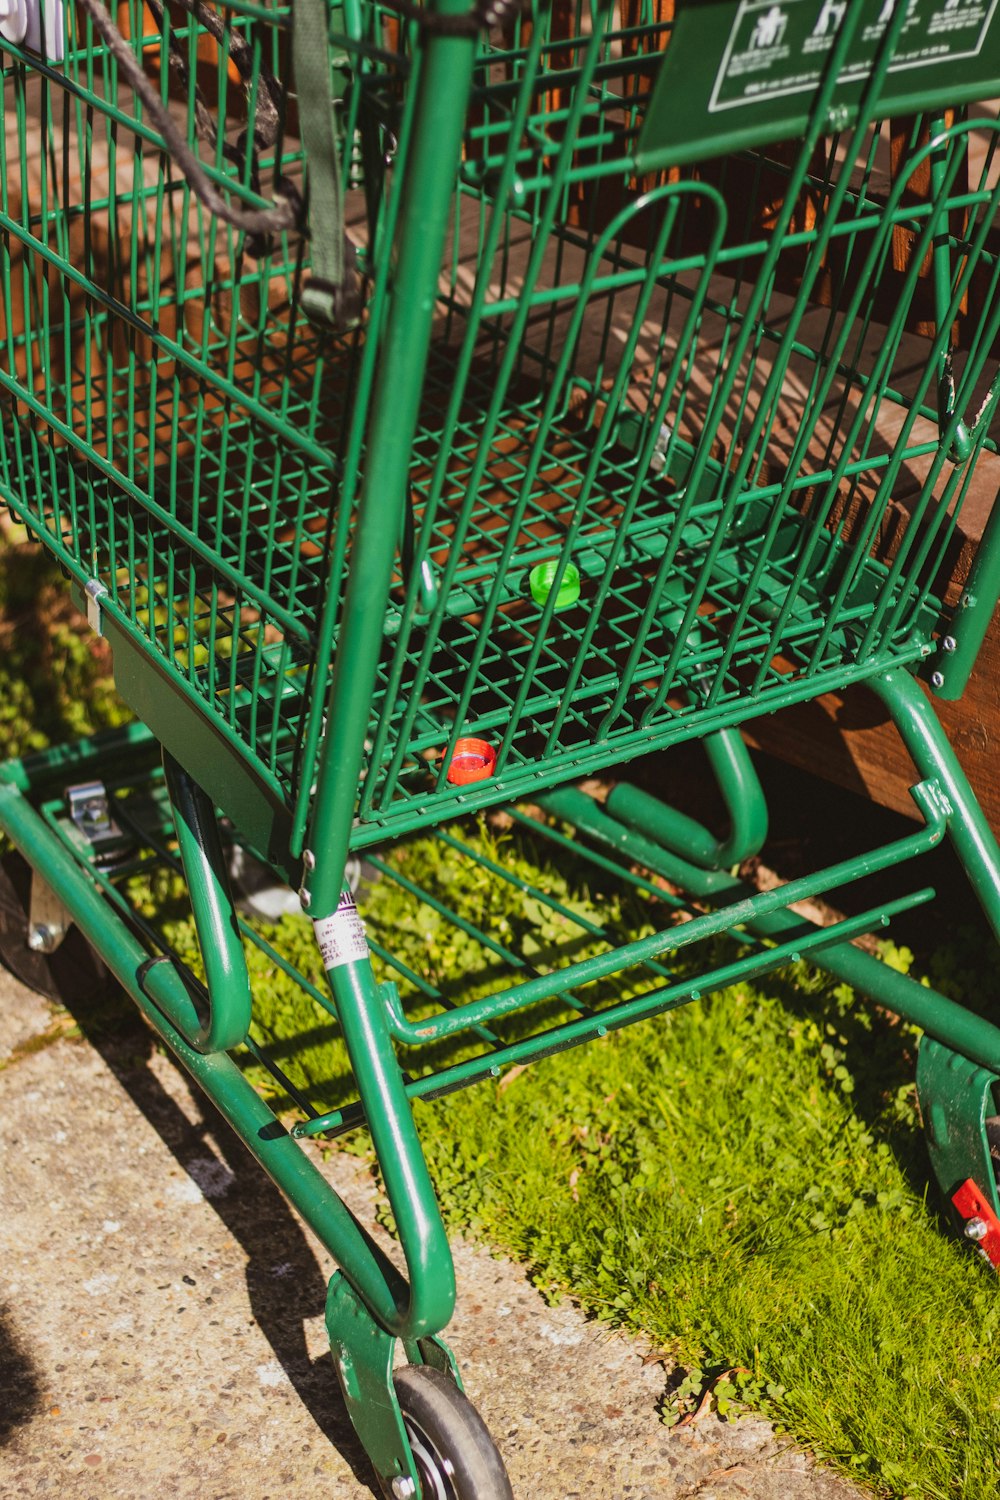 green metal shopping cart on green grass field during daytime